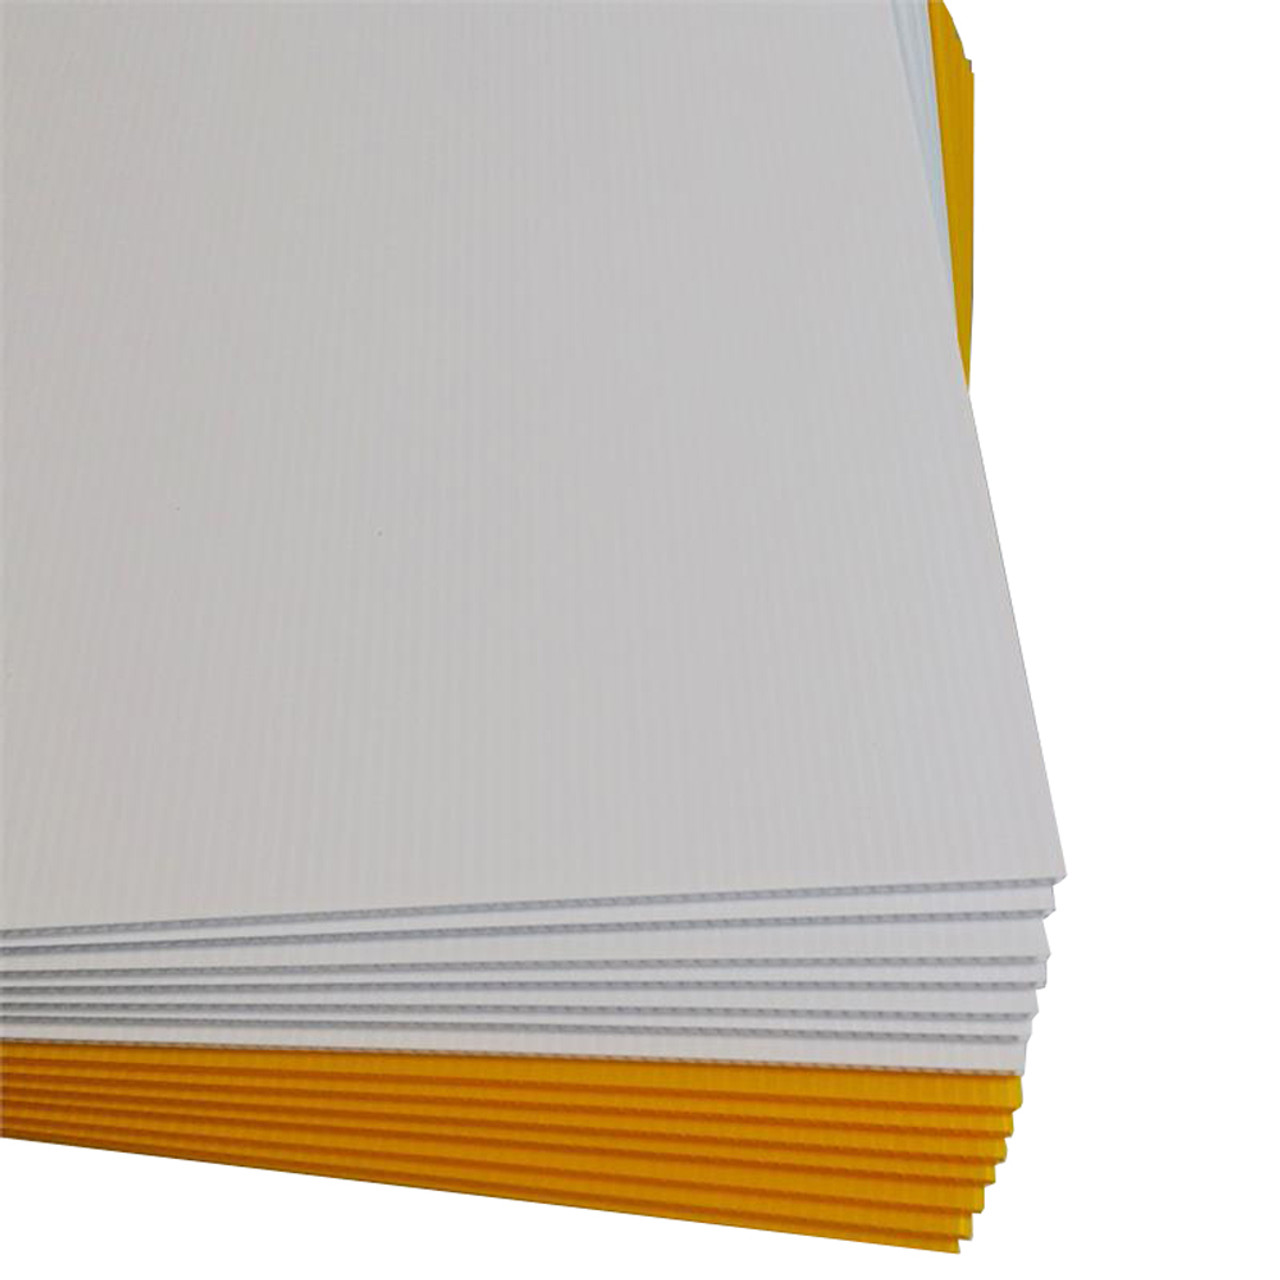 18 x 24 Corrugated Plastic Sheets